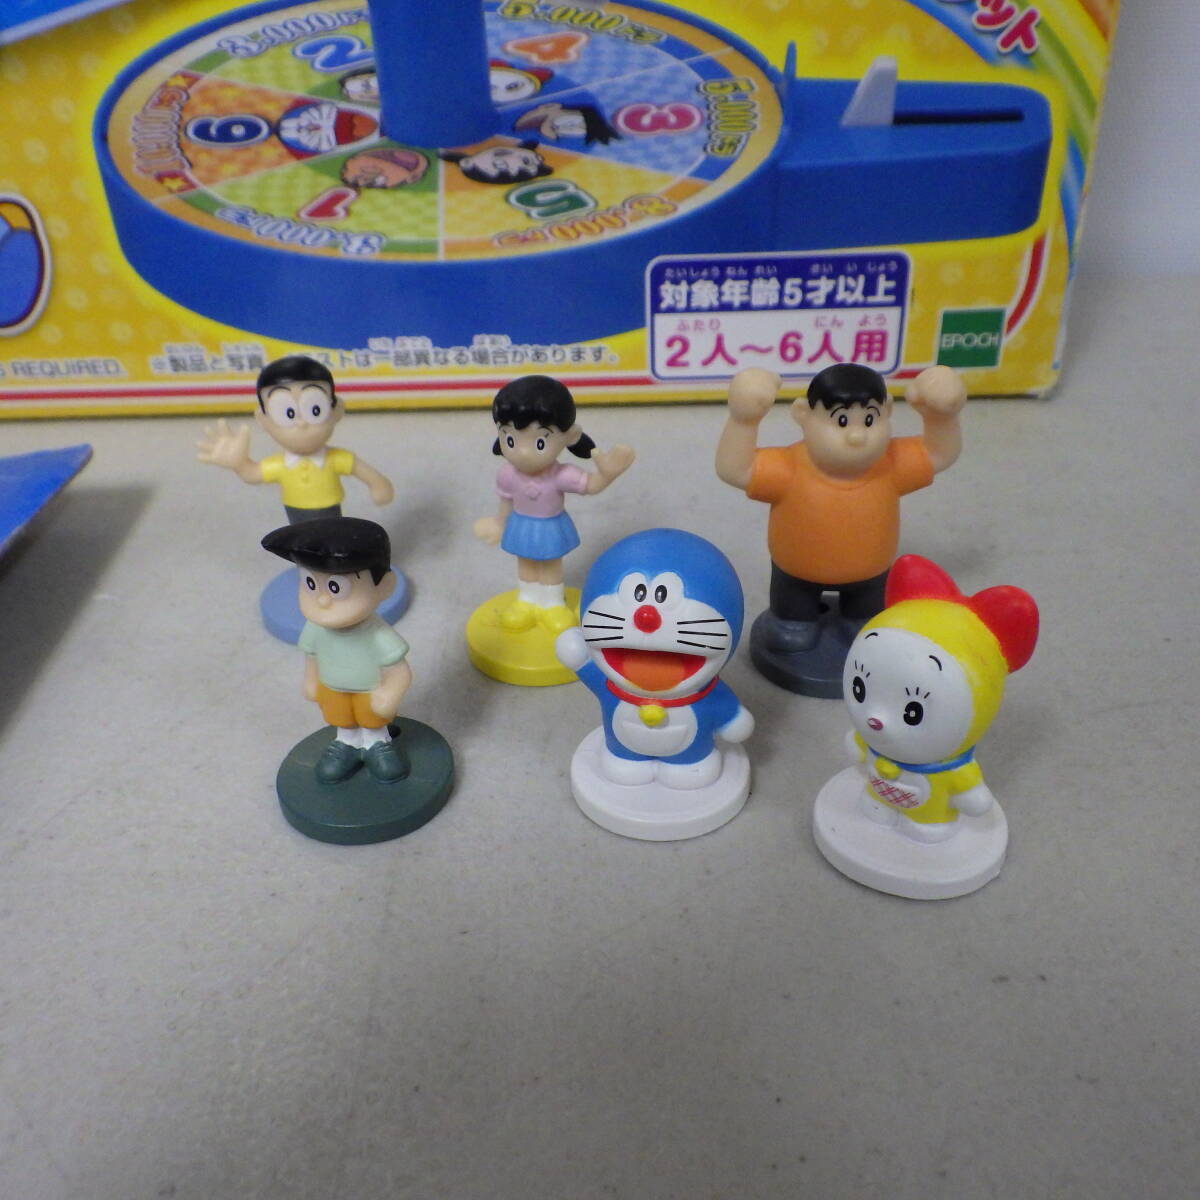  Doraemon Japan travel game 5 operation goods secret. tool card 1 piece stockout anywhere Doraemon 